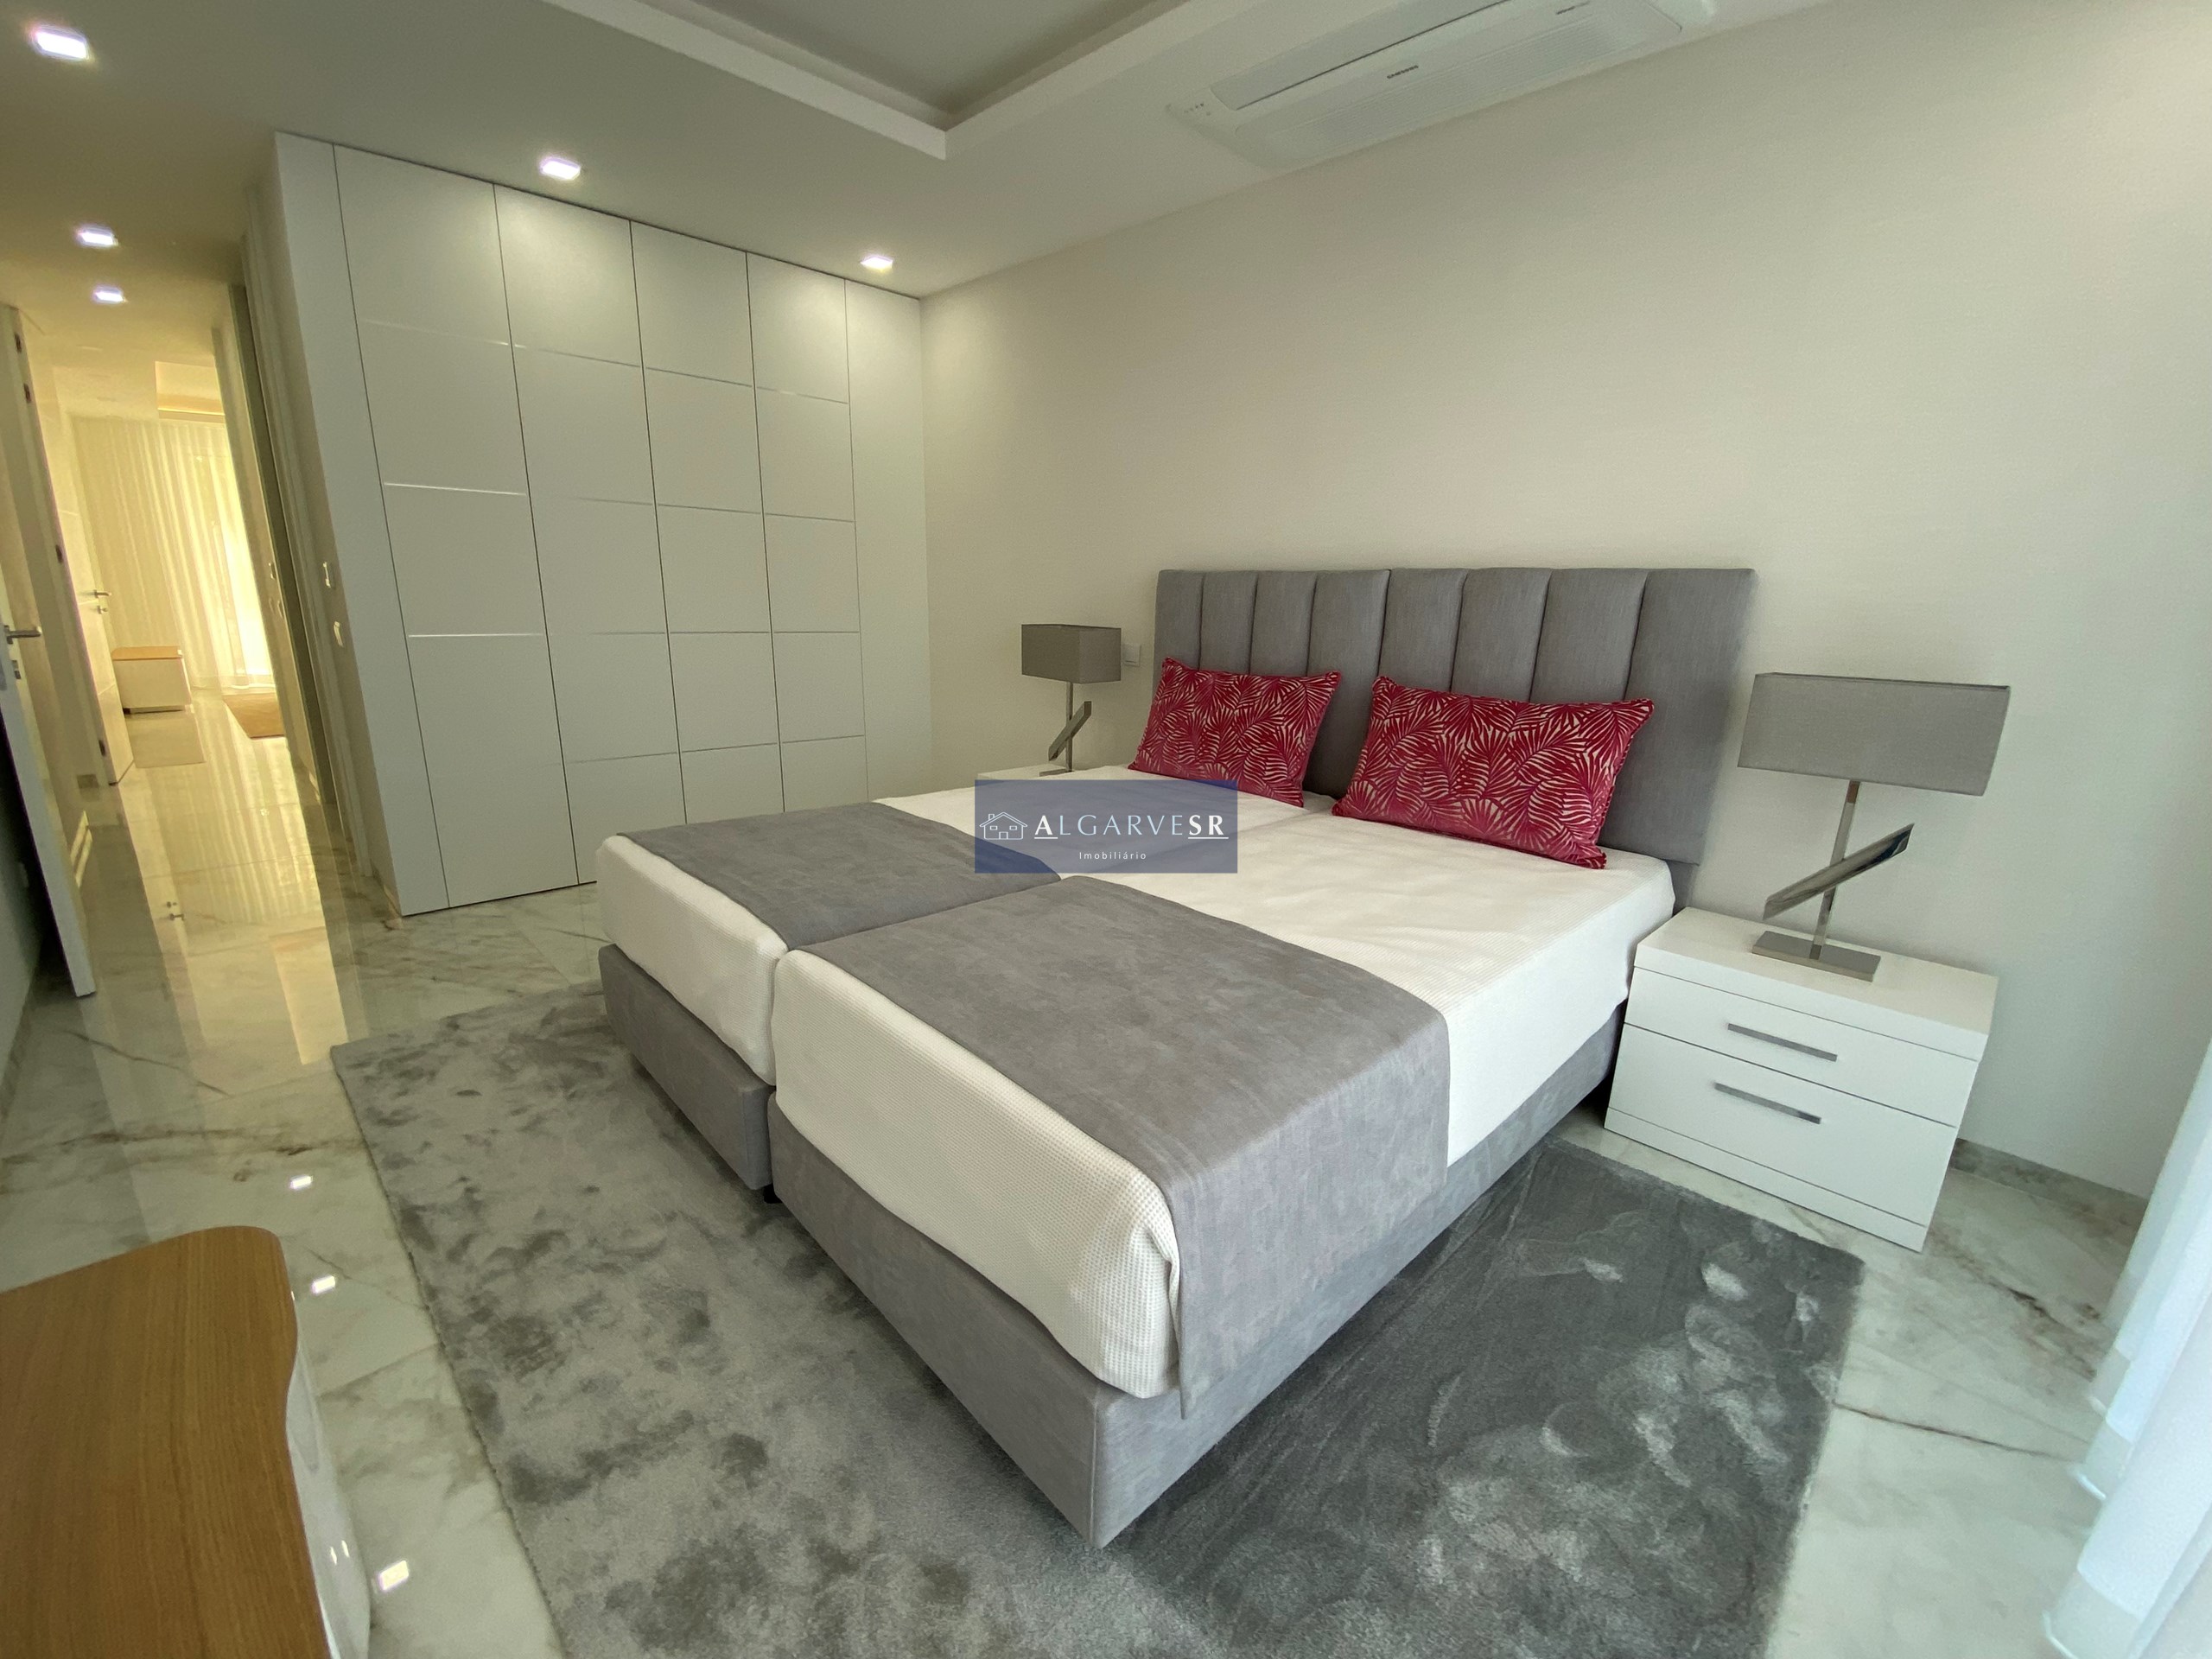 Lagos - Apartamento T2 Novo condominio de luxo c/ piscina 